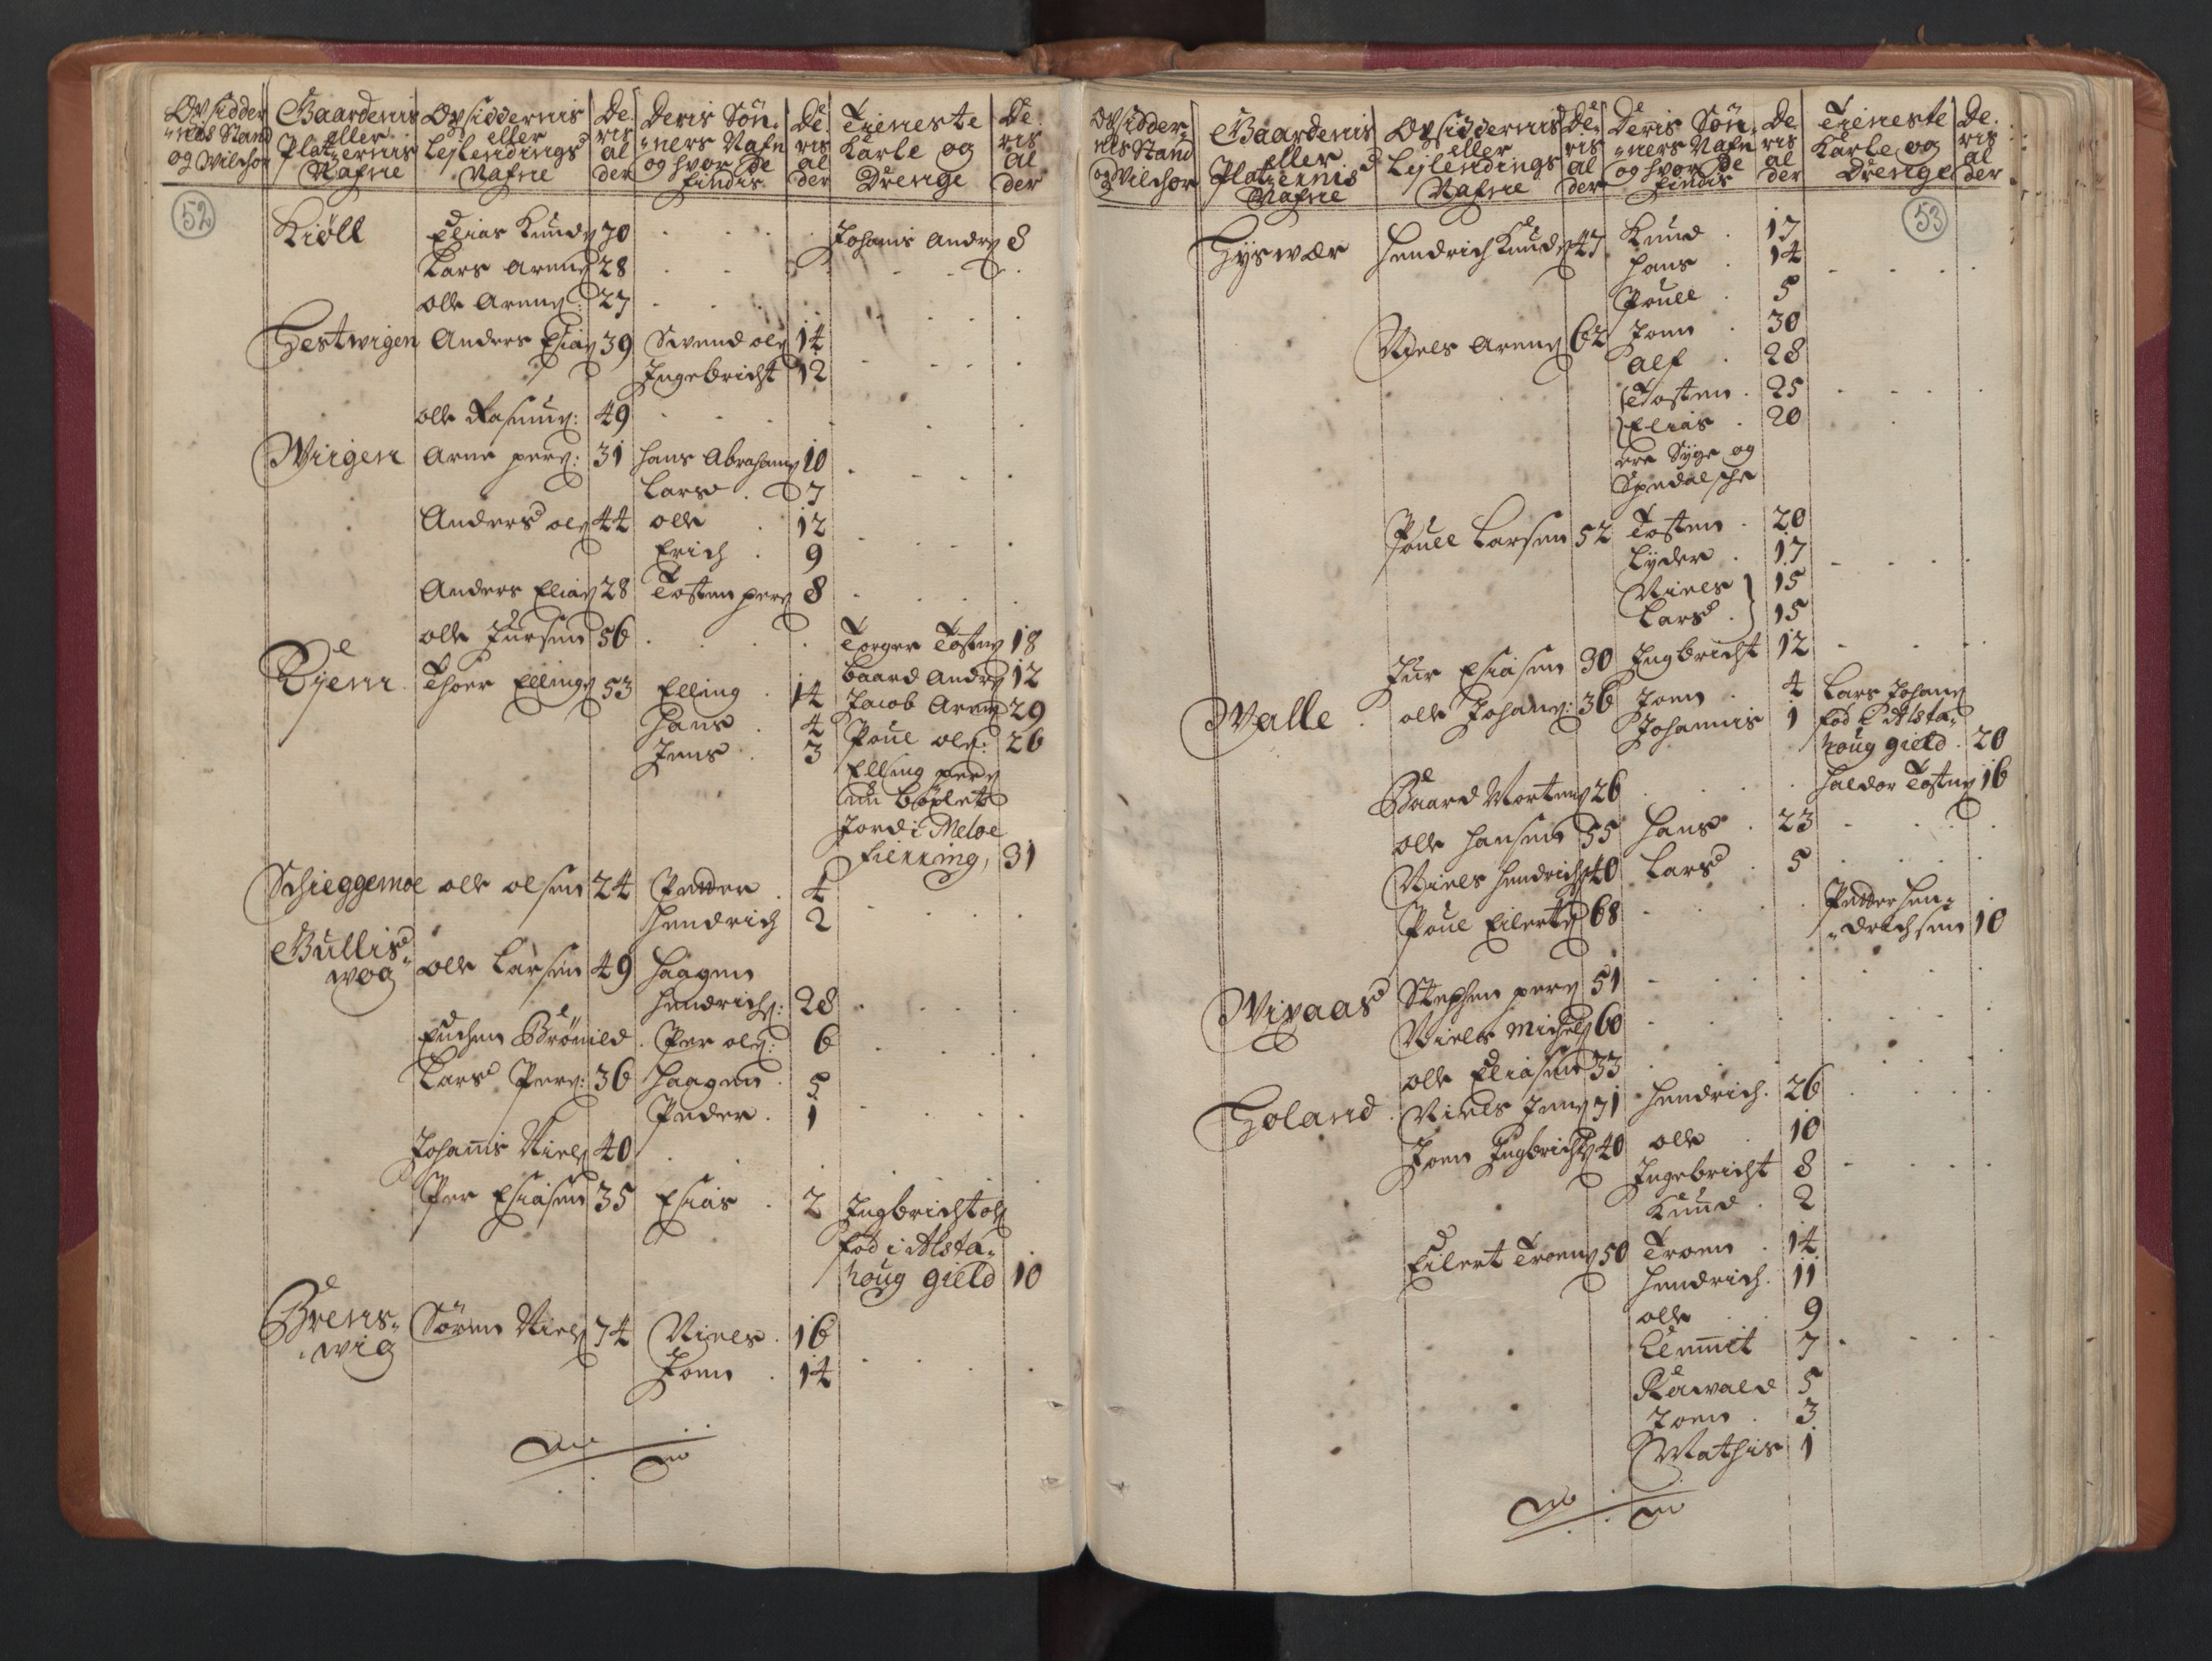 RA, Census (manntall) 1701, no. 16: Helgeland fogderi, 1701, p. 52-53